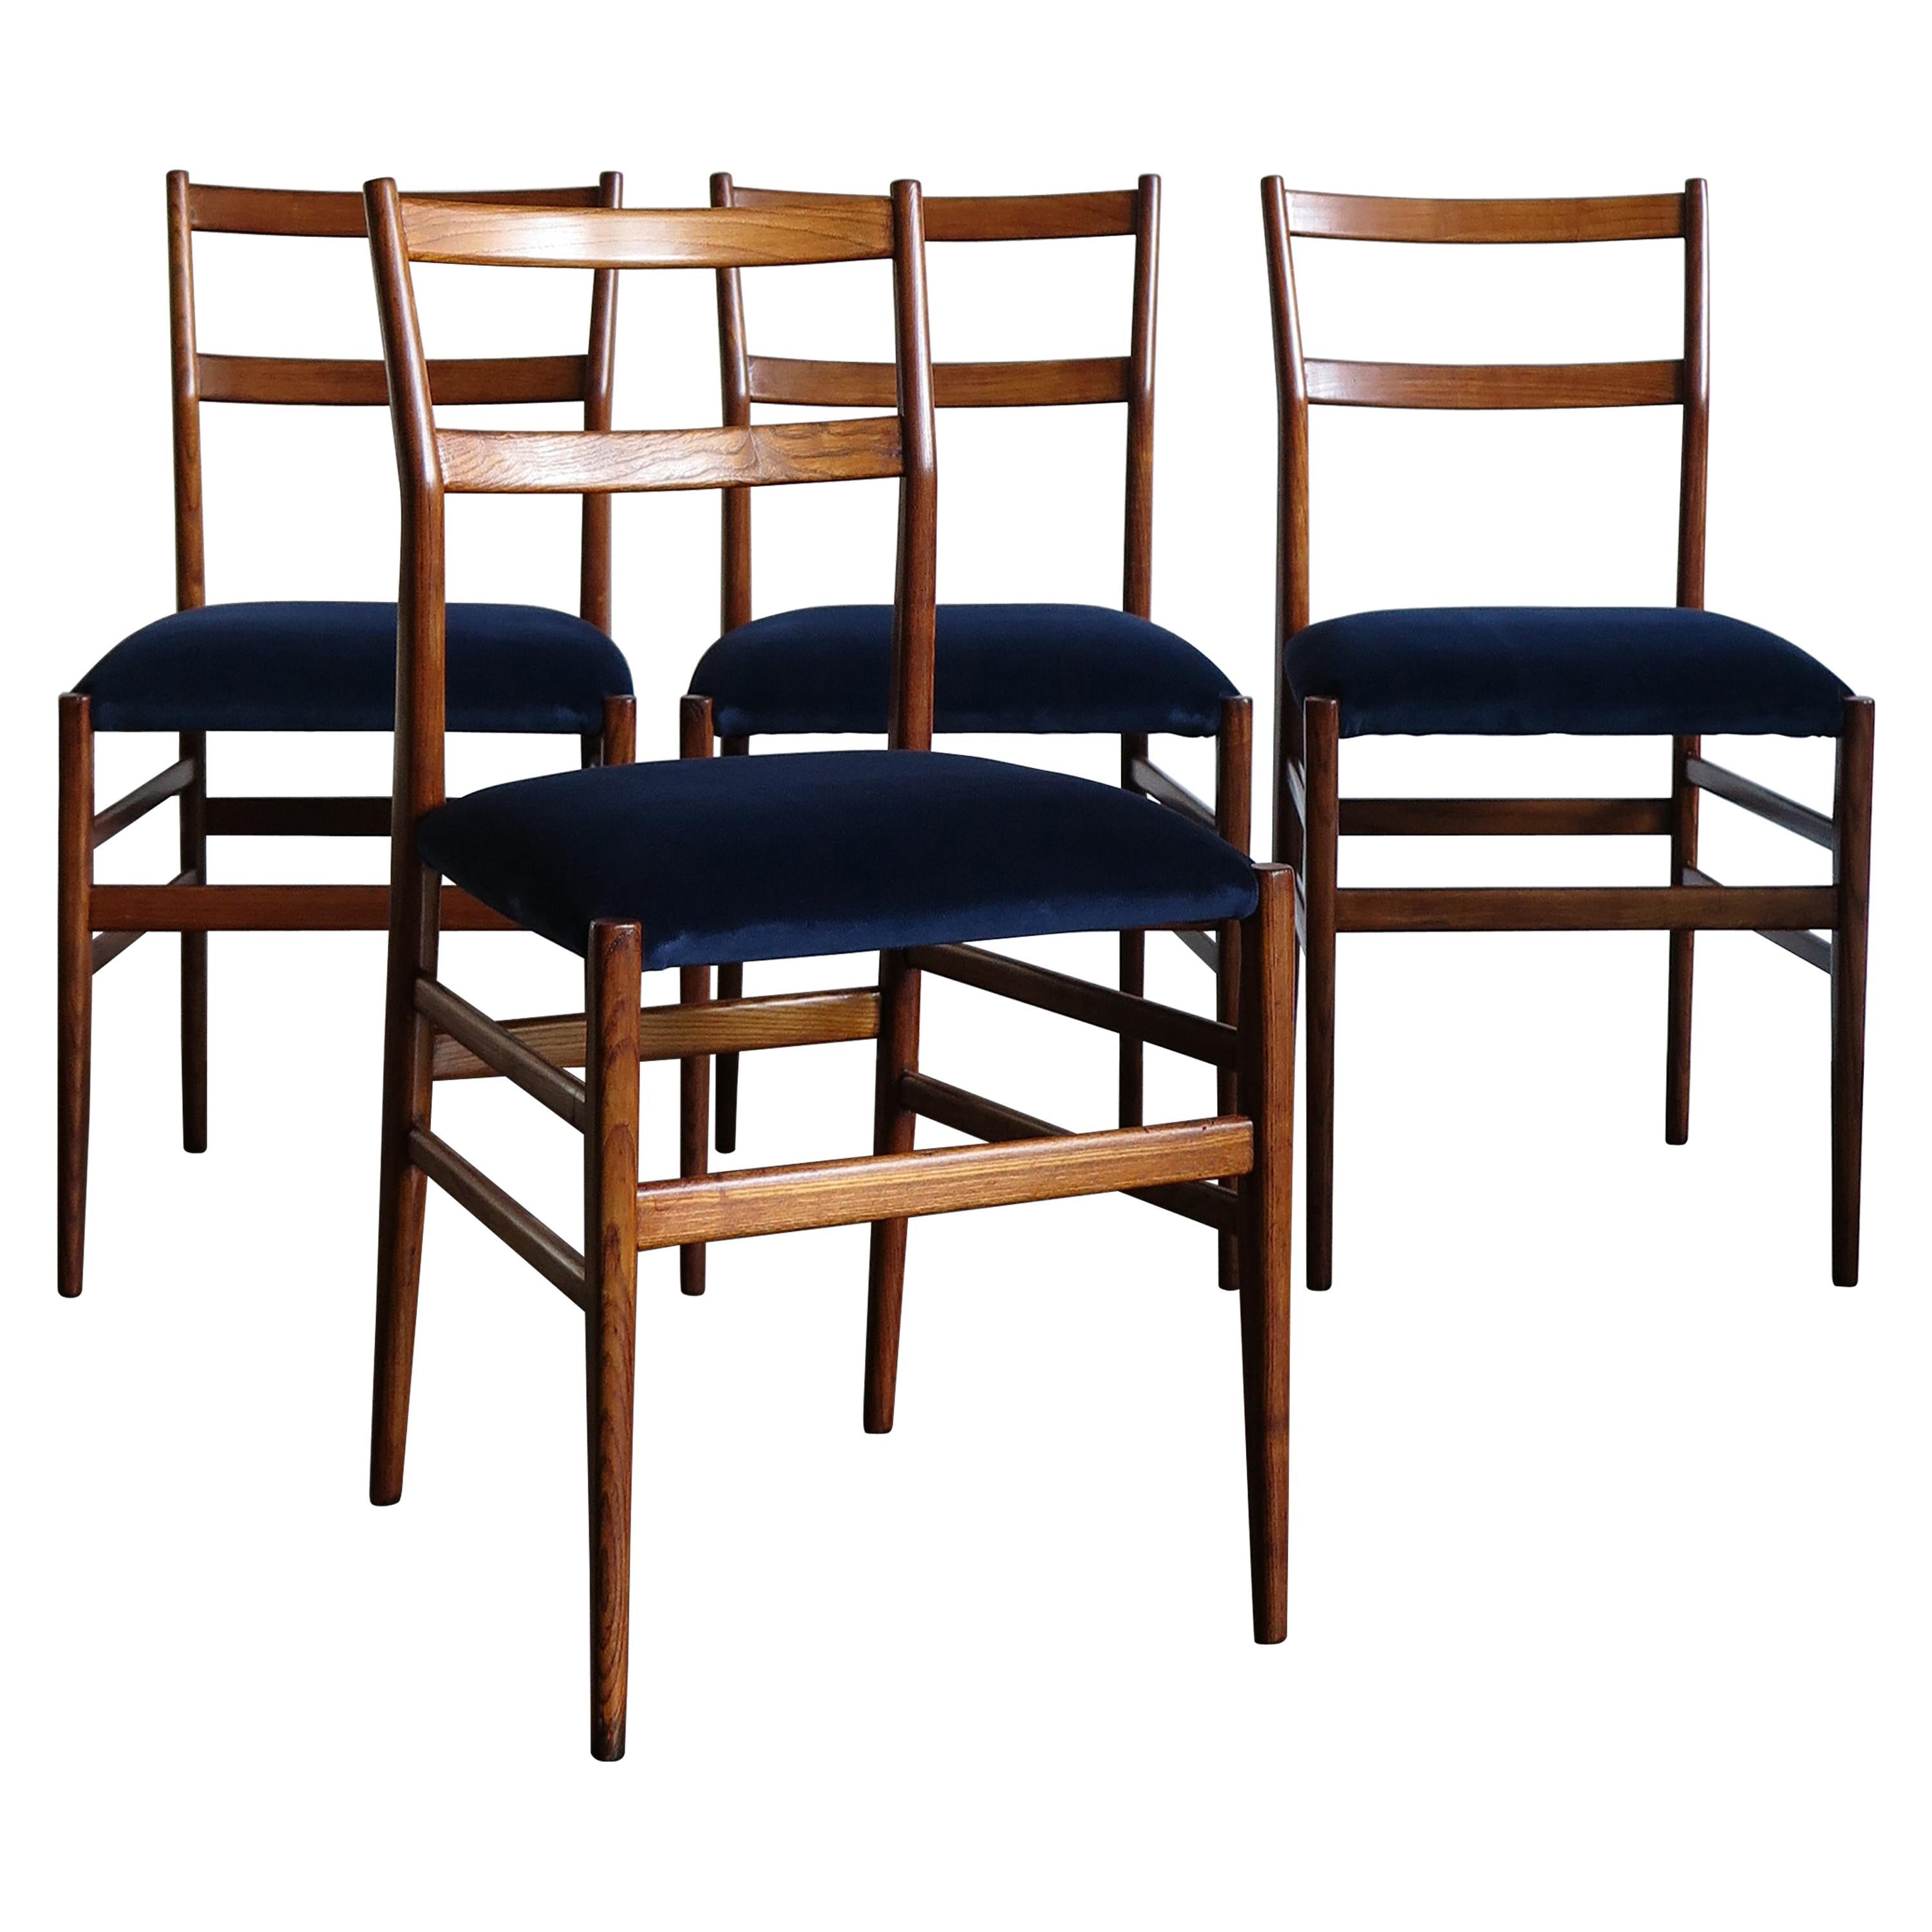 1950s Gio Ponti Italian Midcentury Design Dining Chairs "Leggera" for Cassina